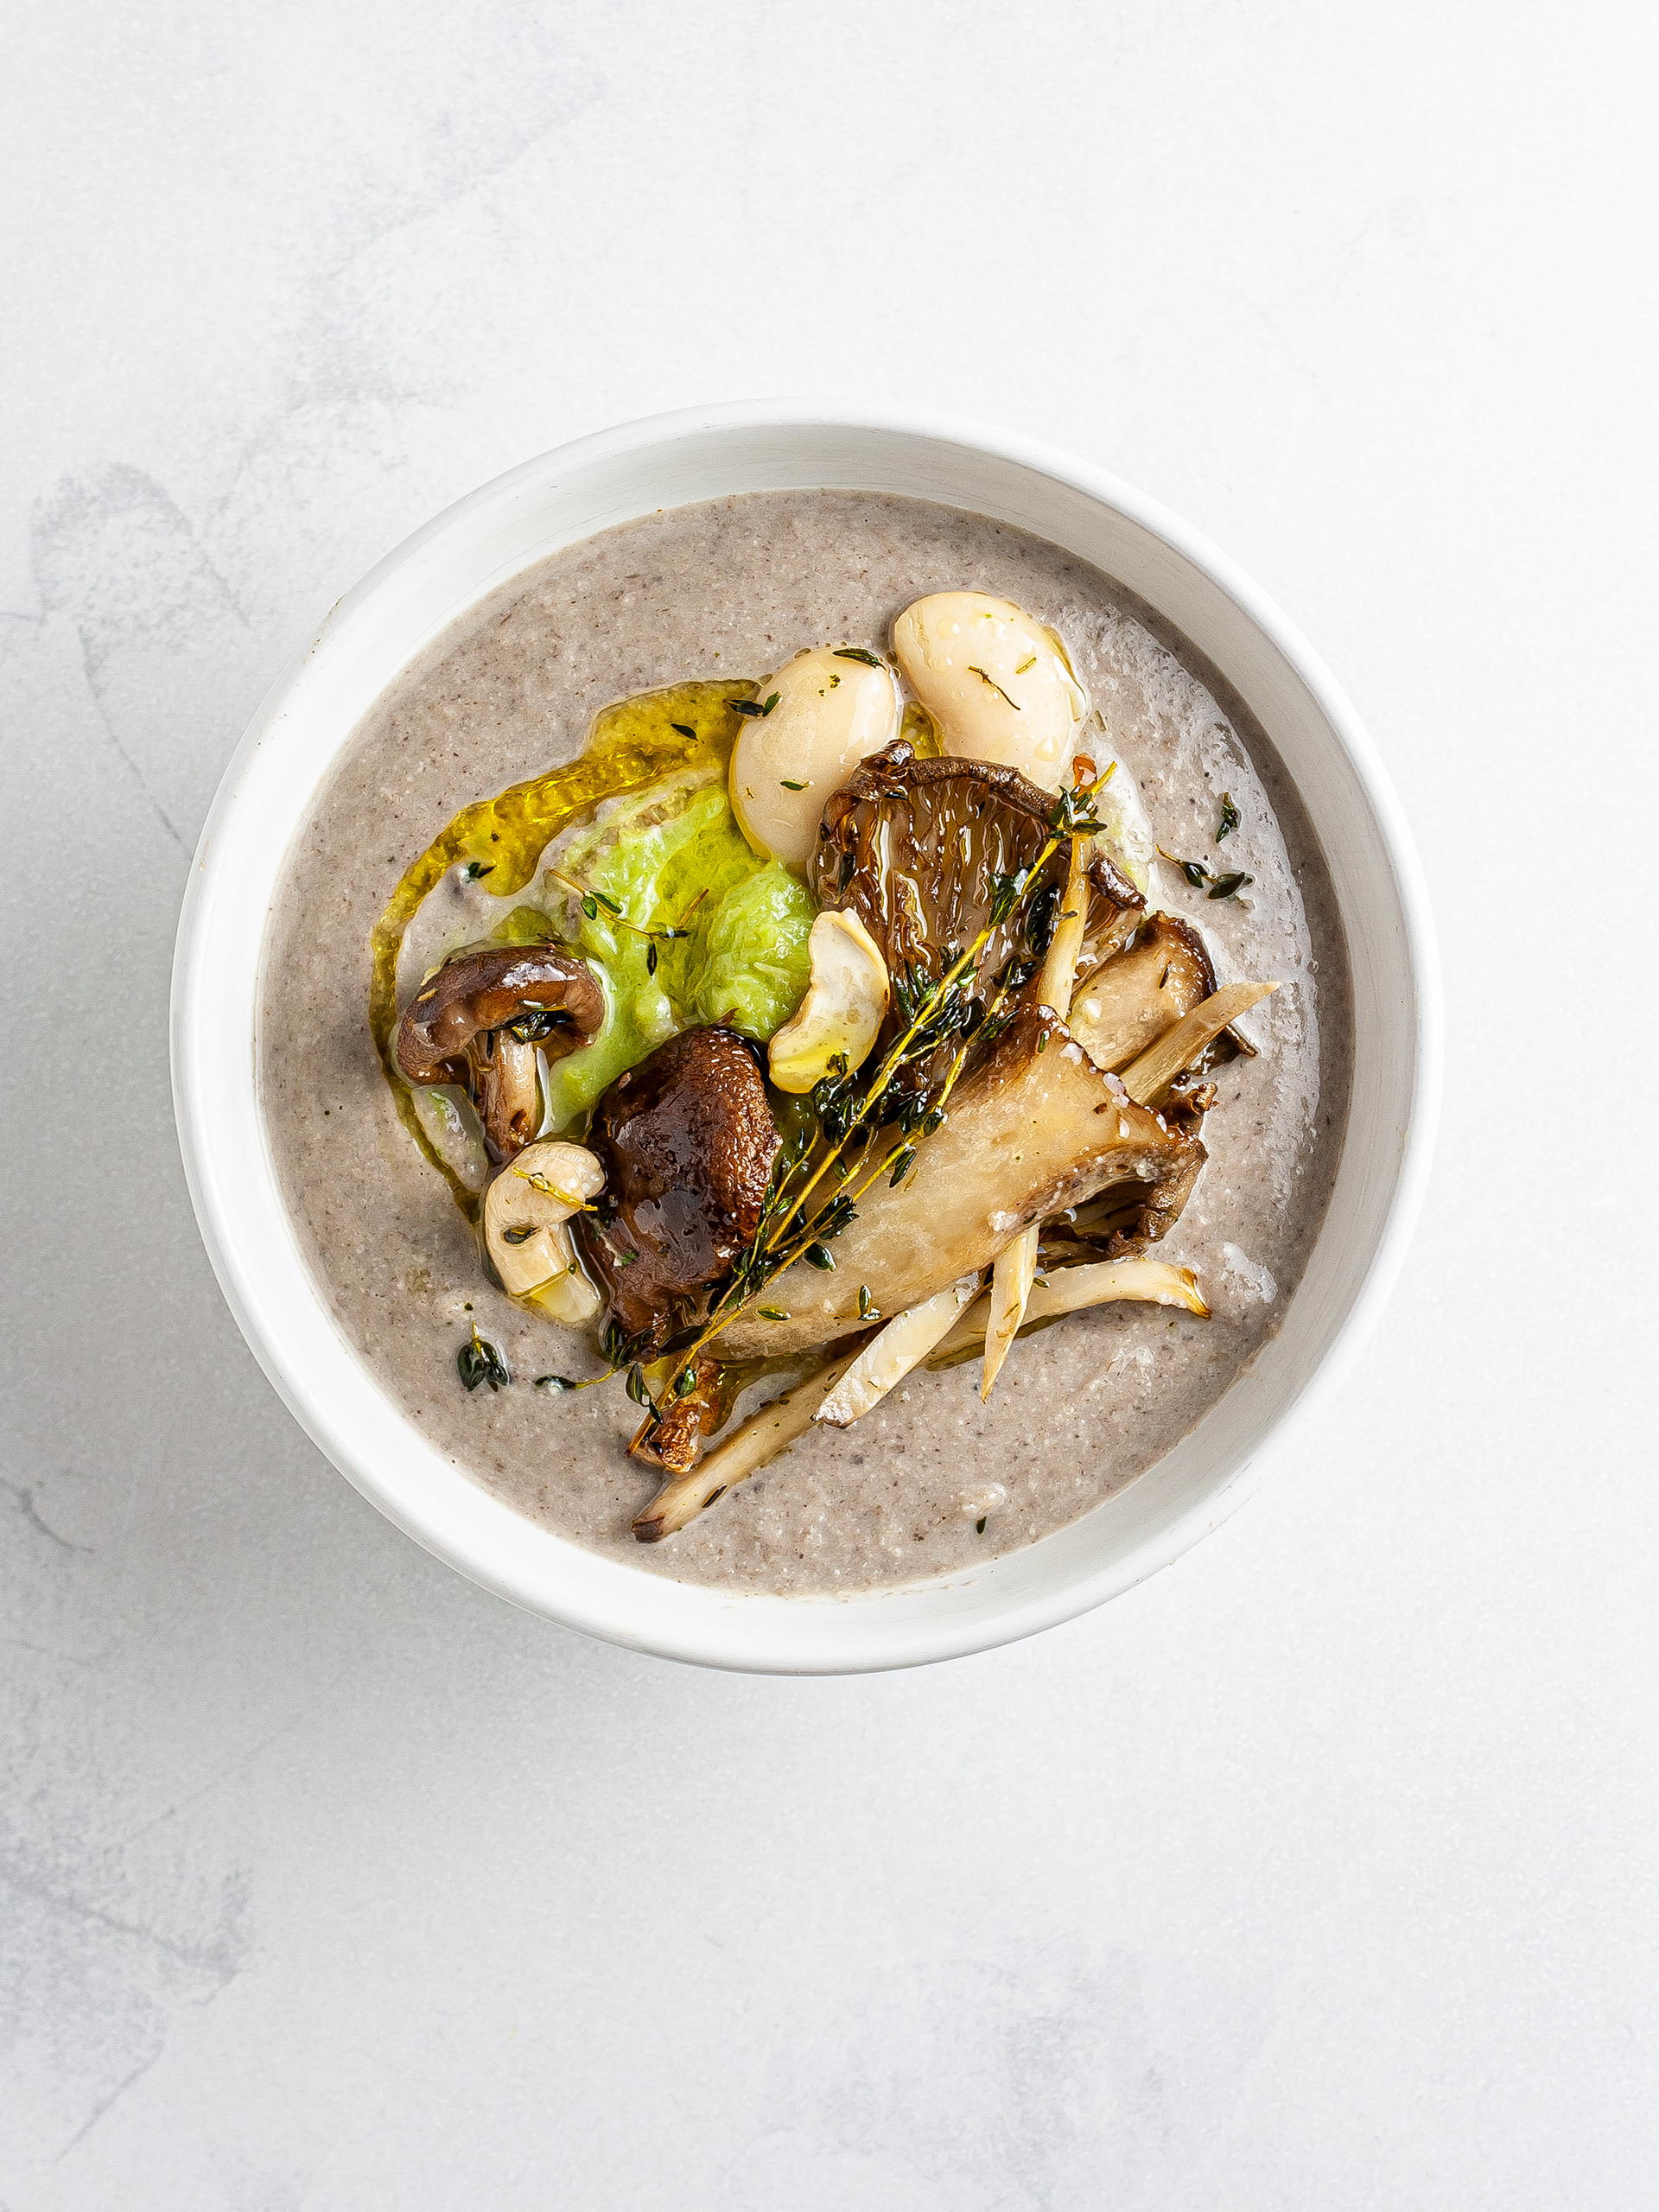 Vegan mushroom soup topped with leek purée